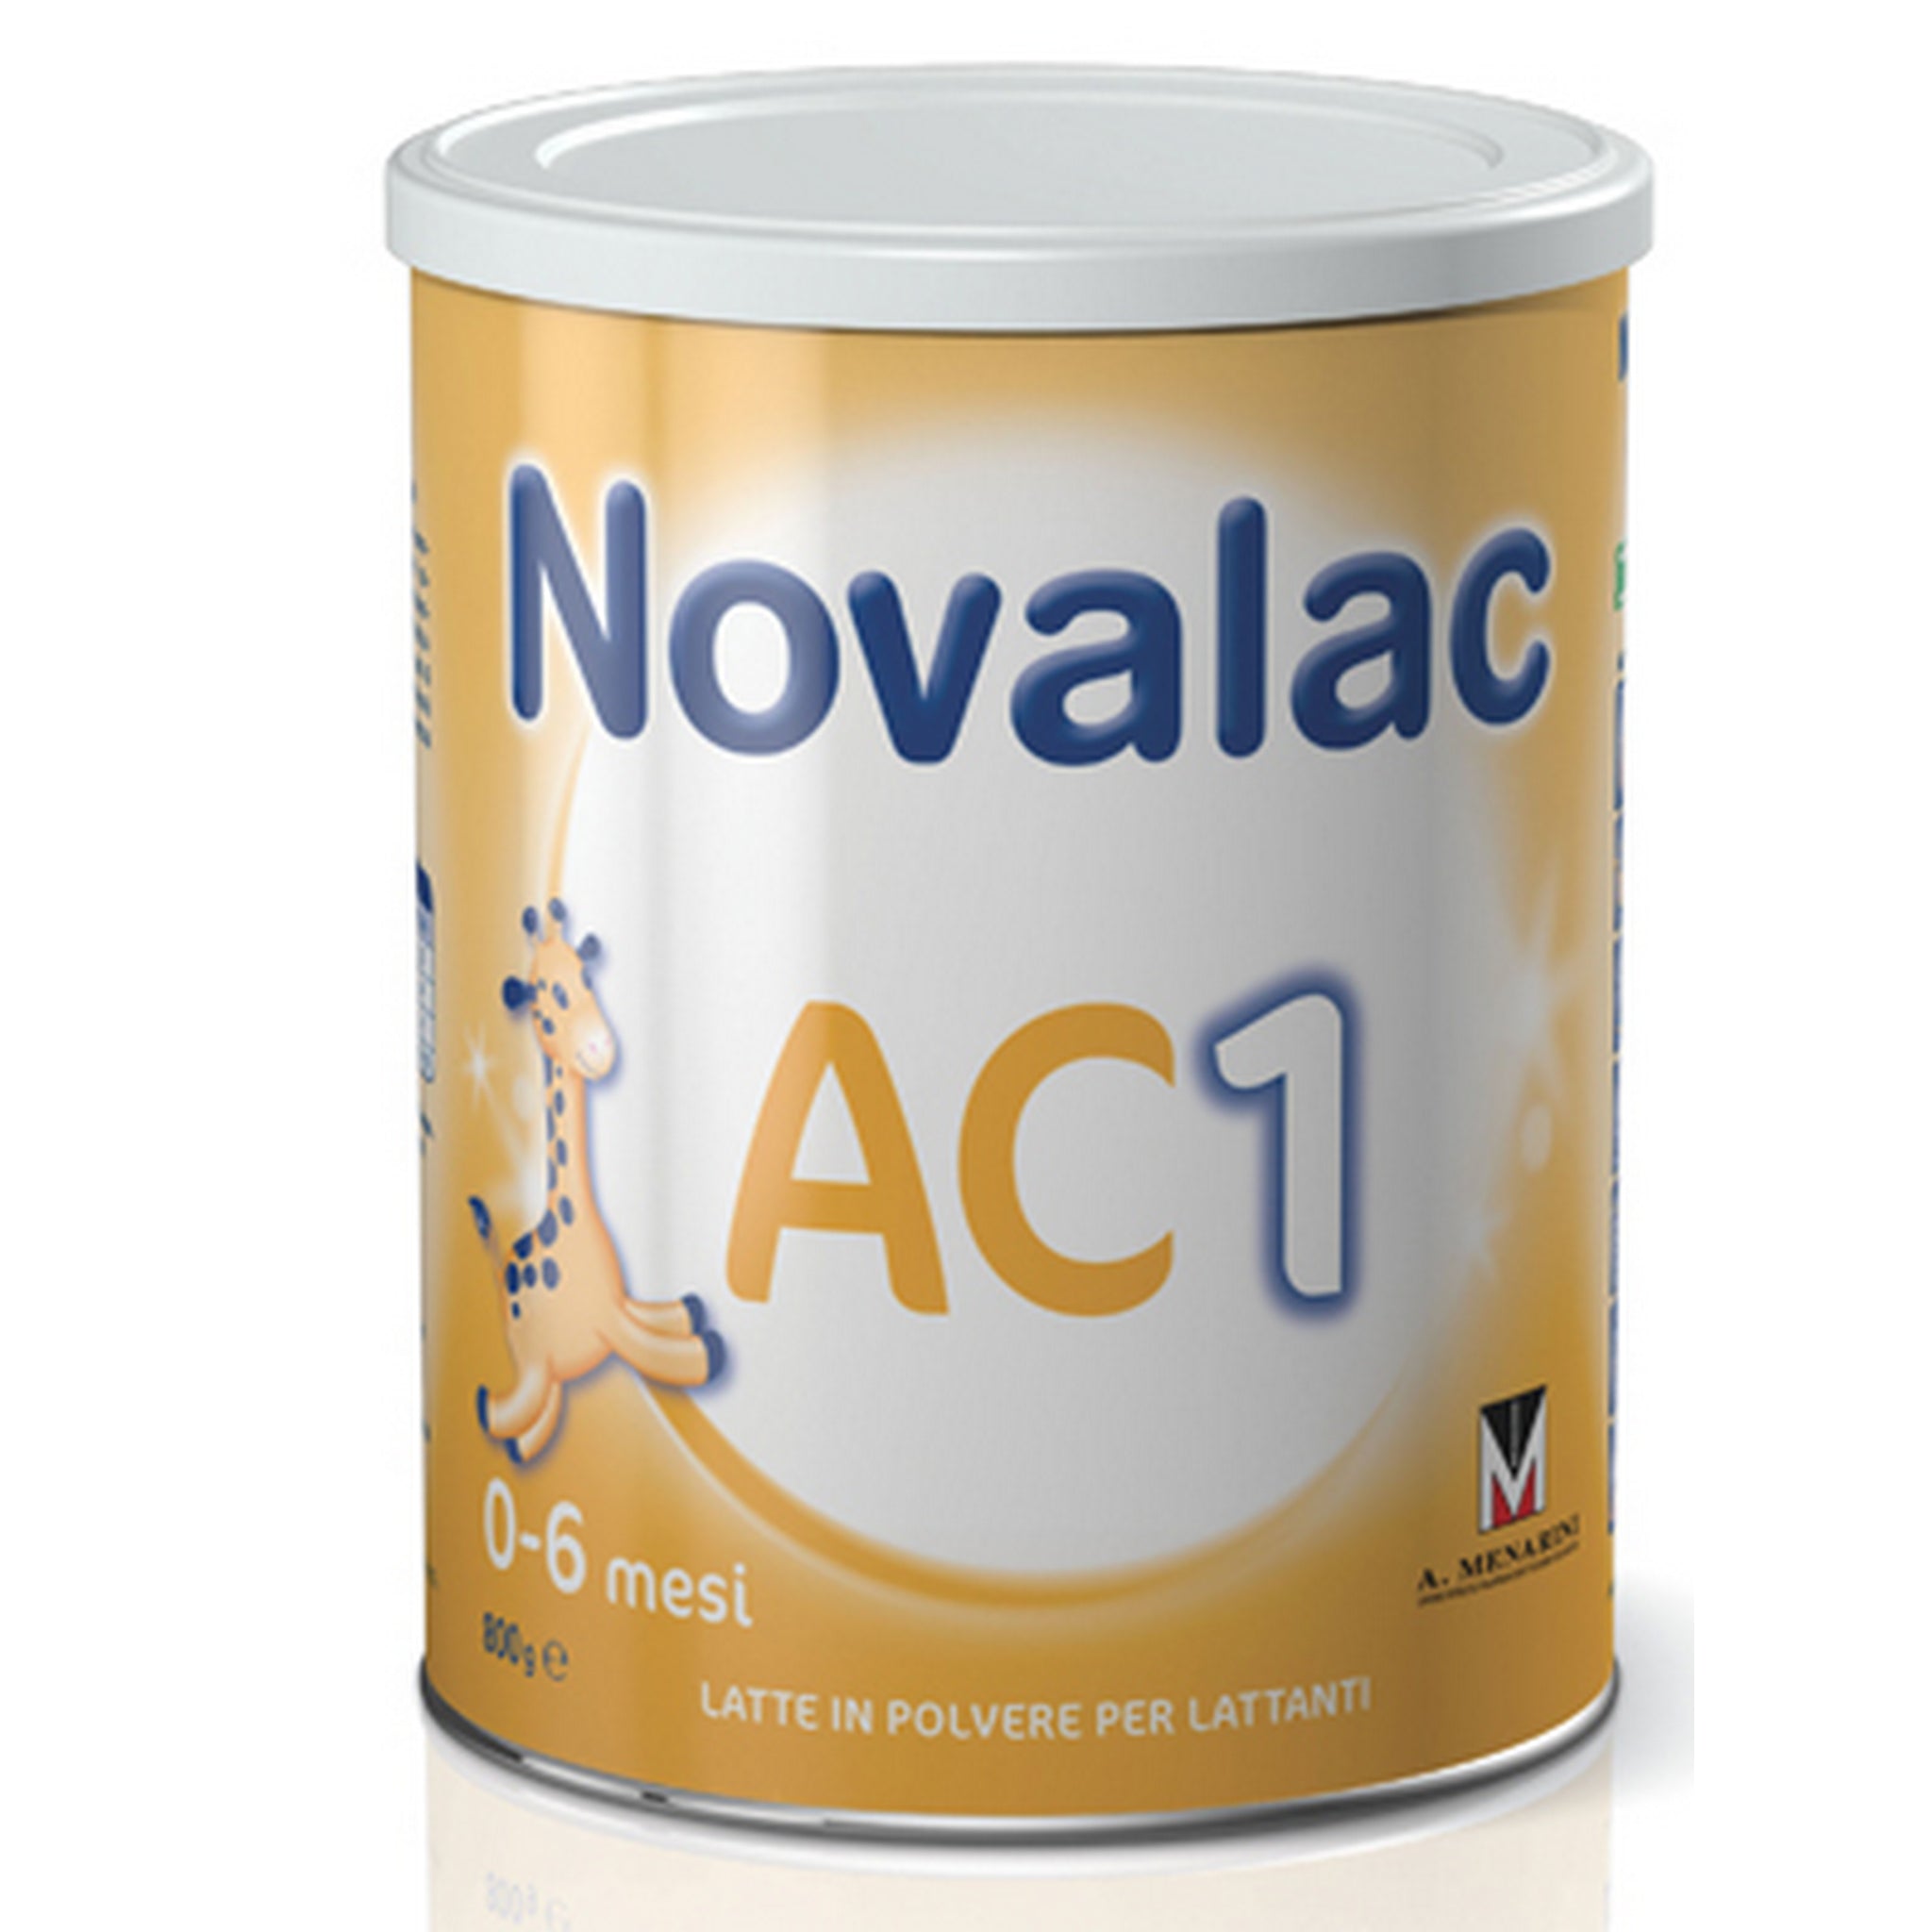 Novalac Ac 1 Latte Polvere800g